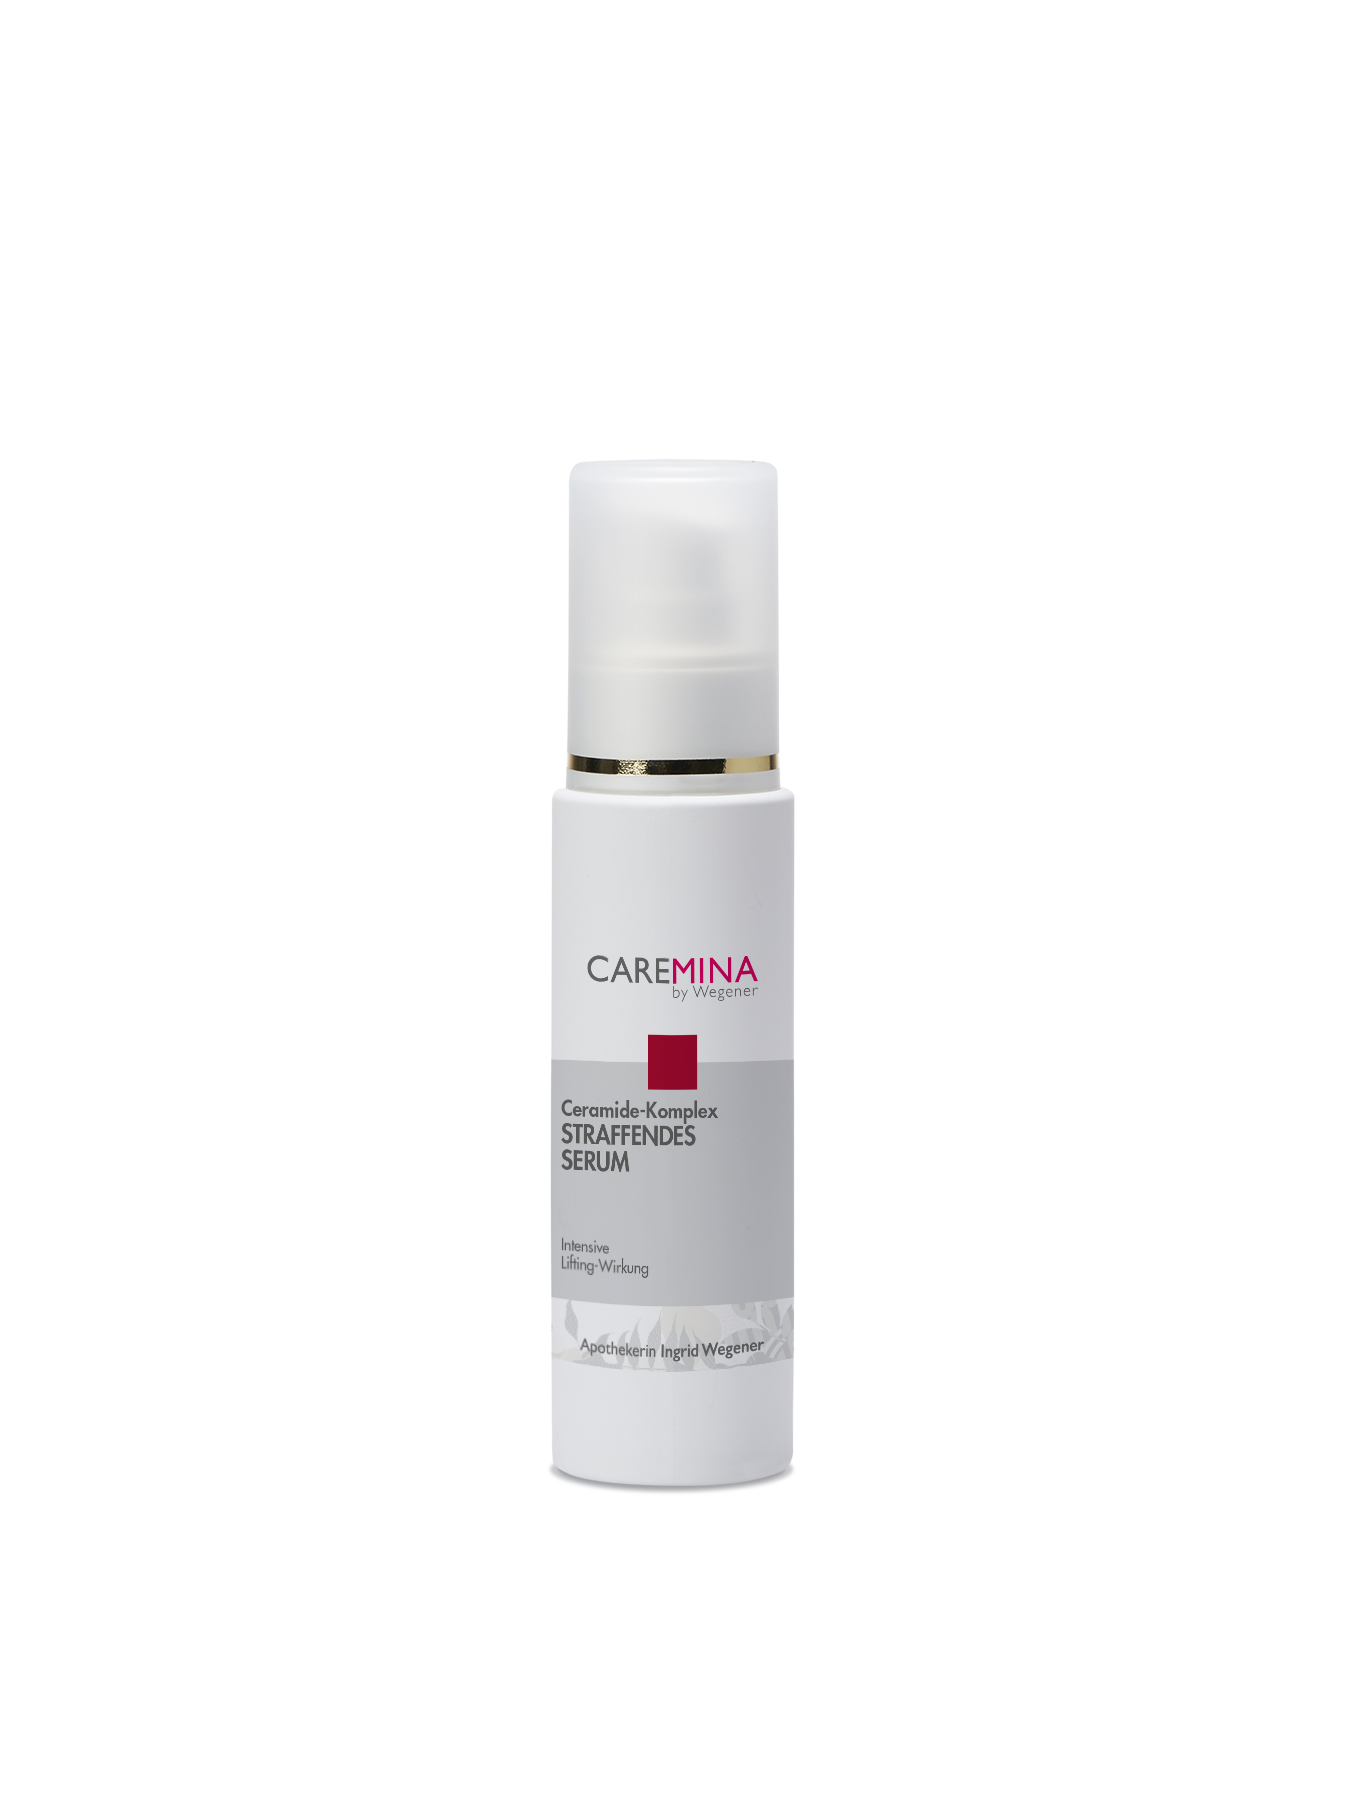 Caremina Ceramide-Komplex Straffendes Serum